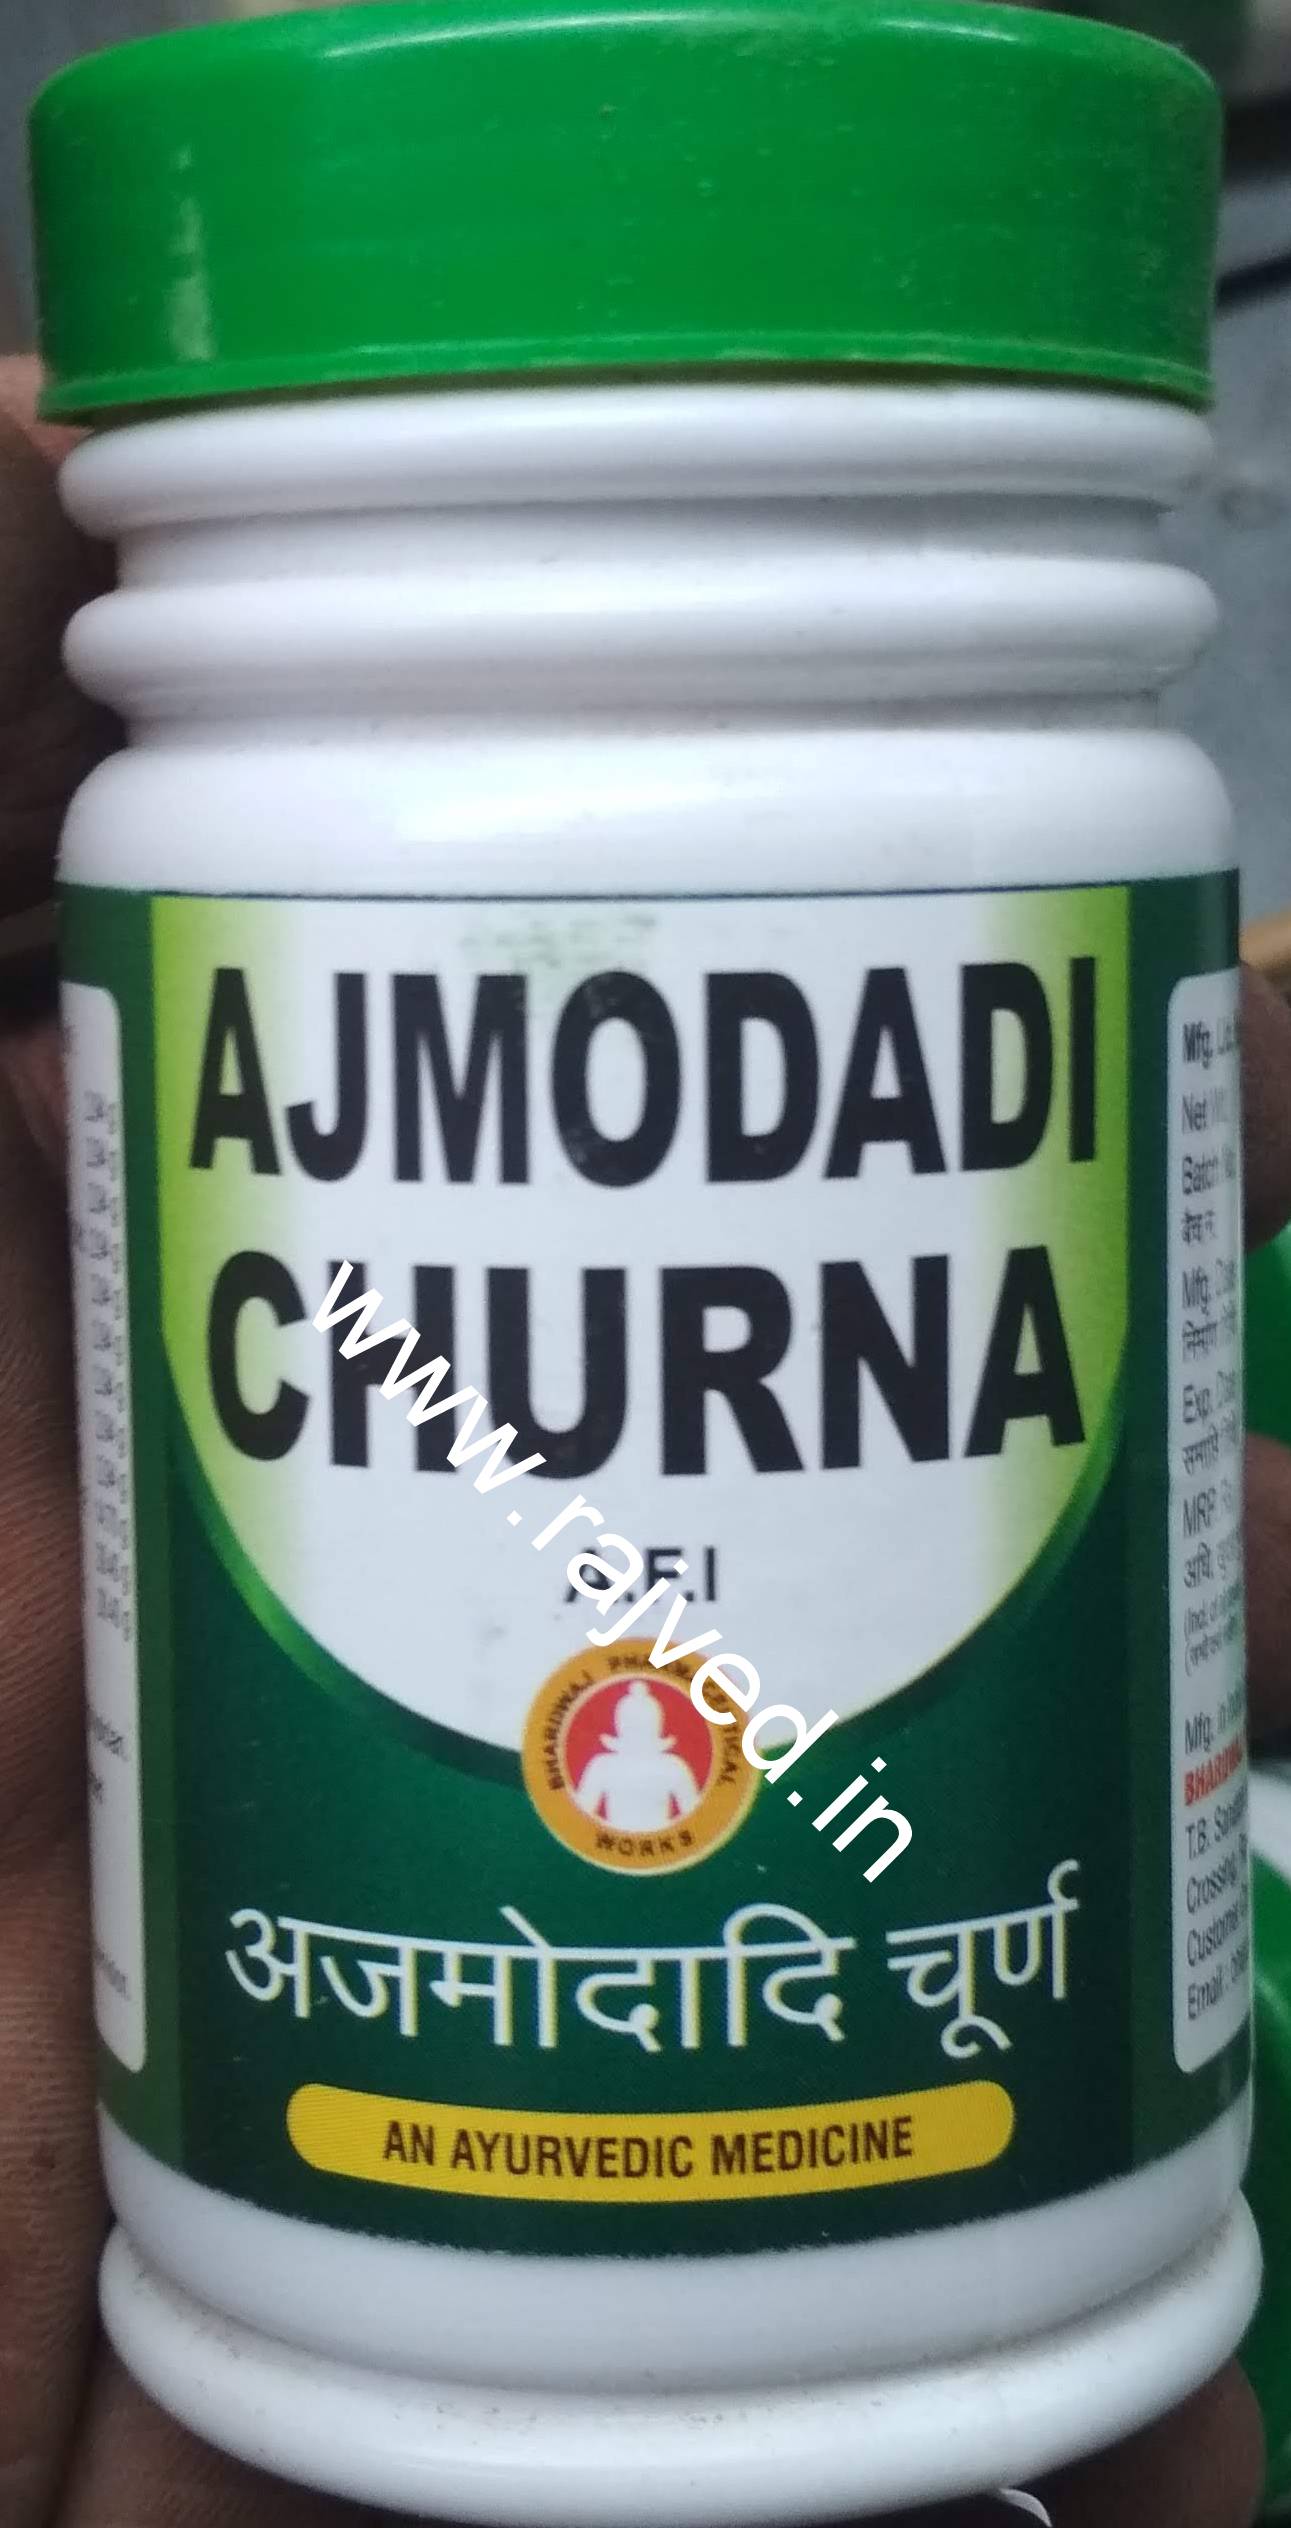 ajmodadi churna 100 gm bharadwaj pharmaceuticals indore